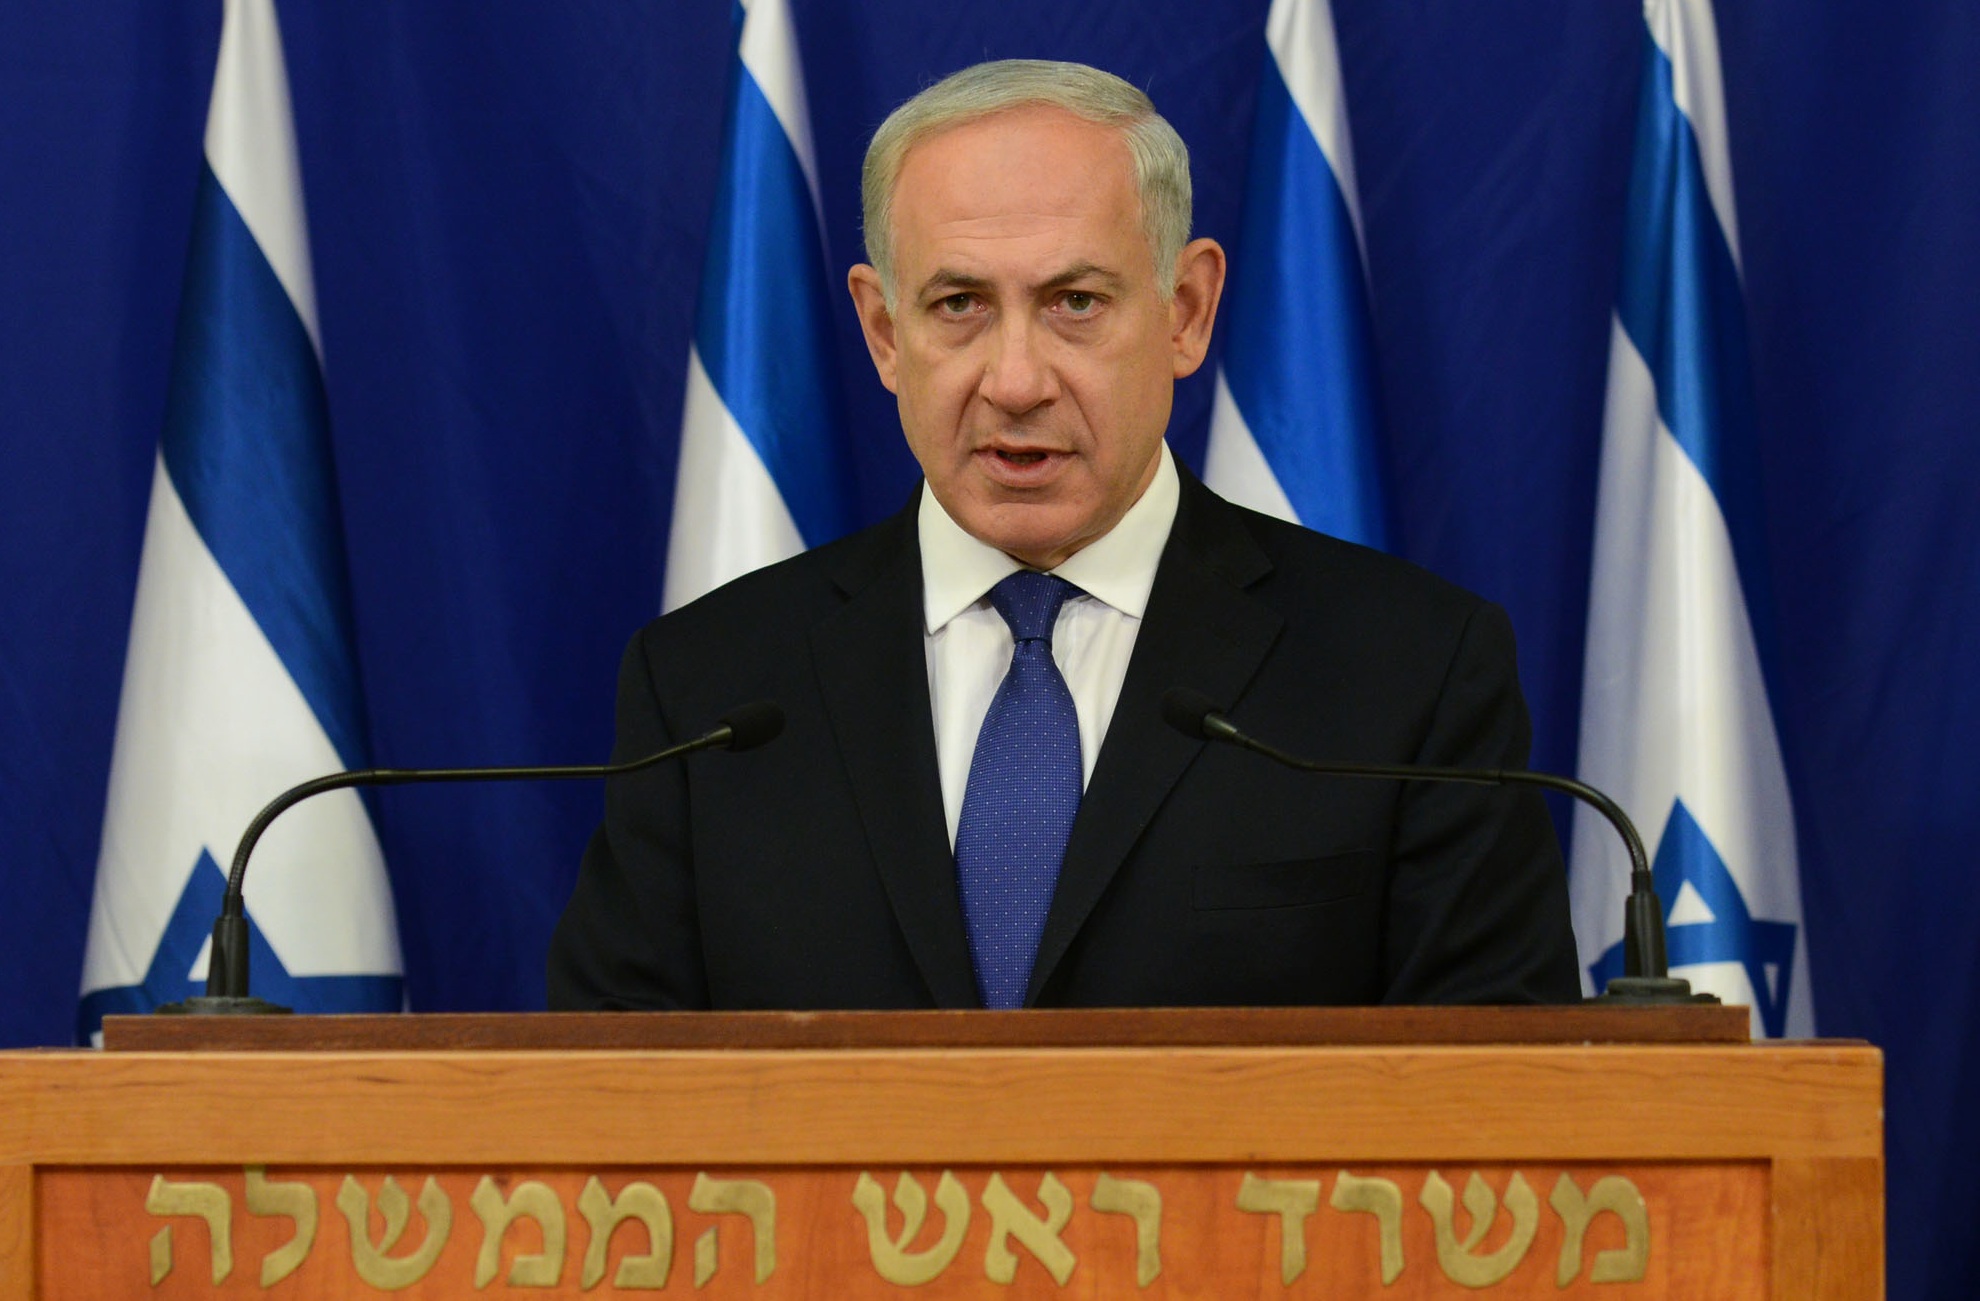 Prime Minister Benjamin Netanyahu responds to President Obama's speech at the United Nations, Sept. 24, 2013. (Kobi Gideon/ via Getty Images)